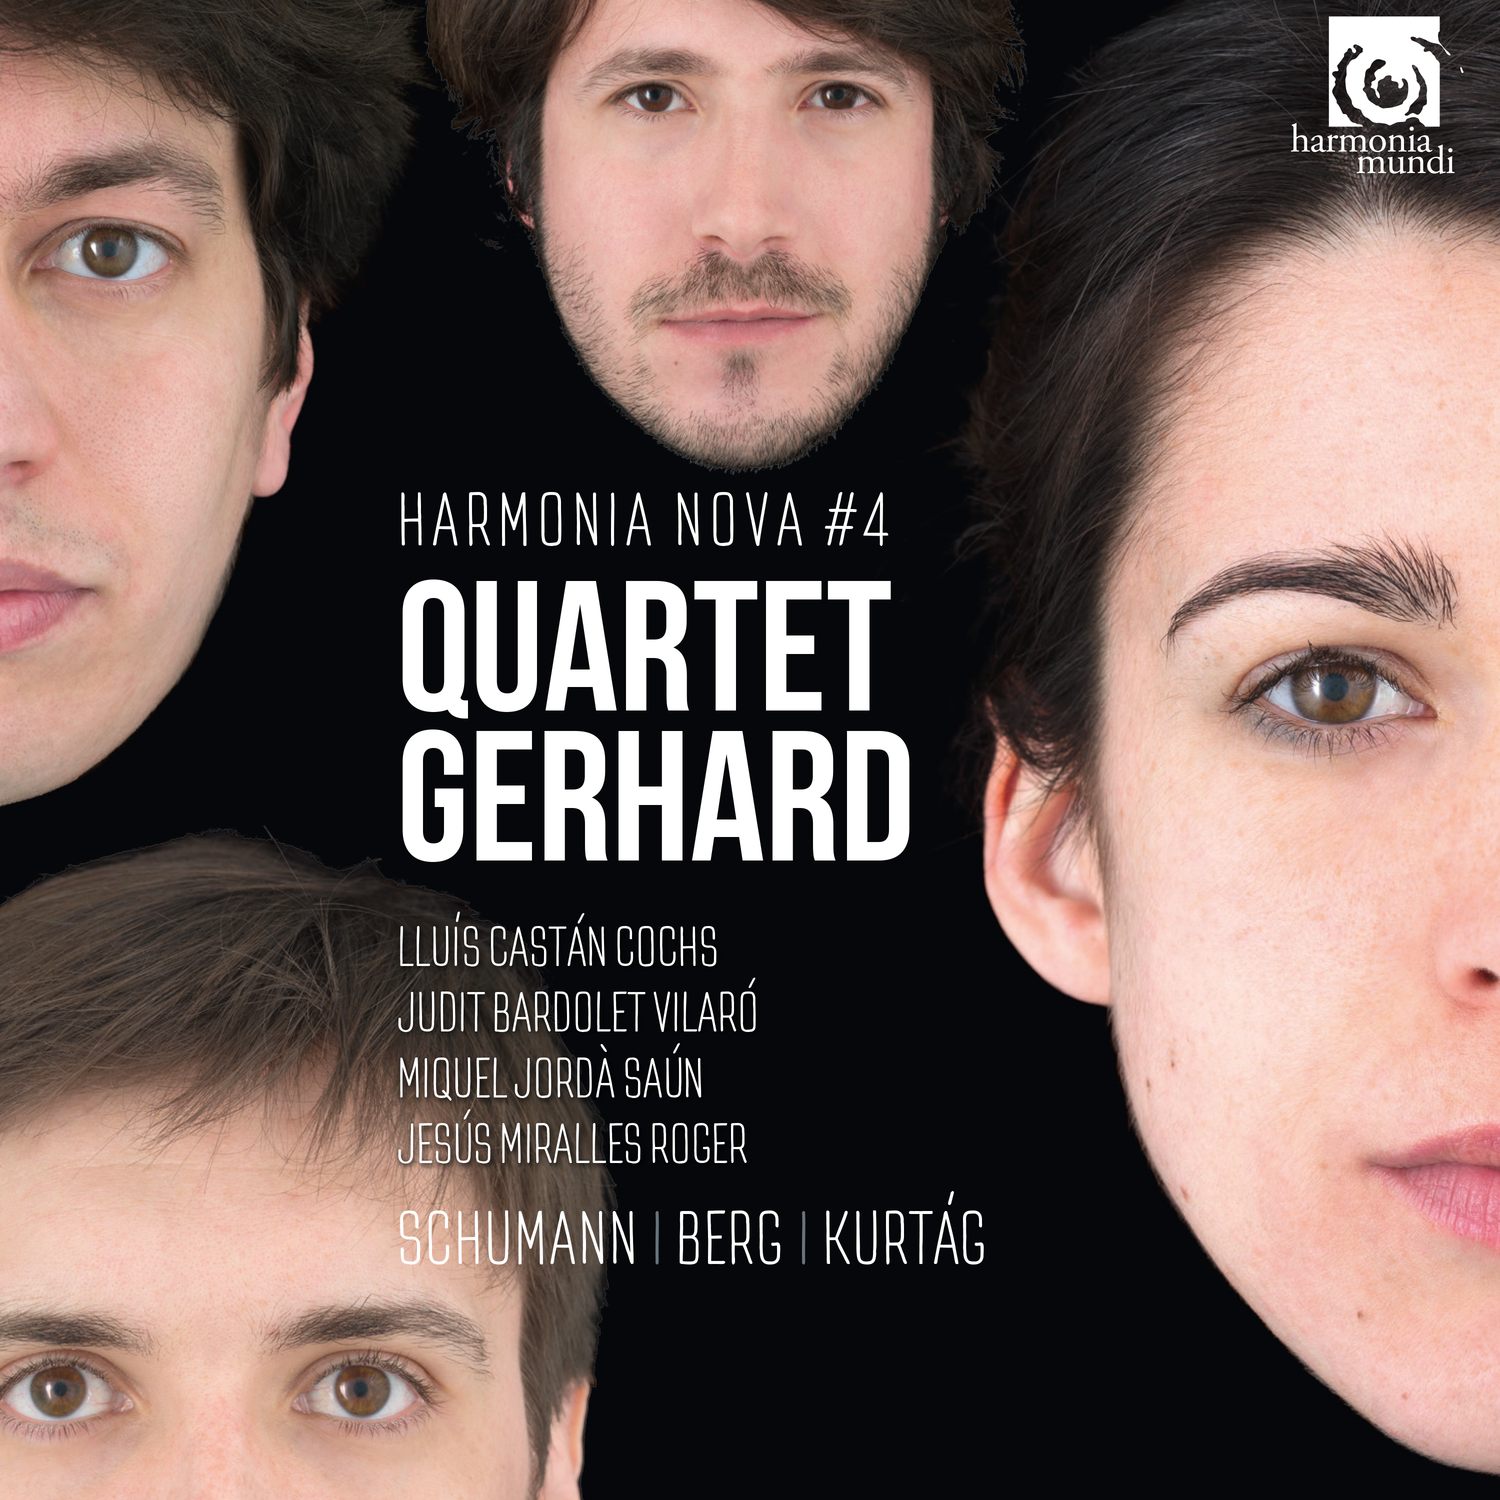 Cuarteto Gerhard